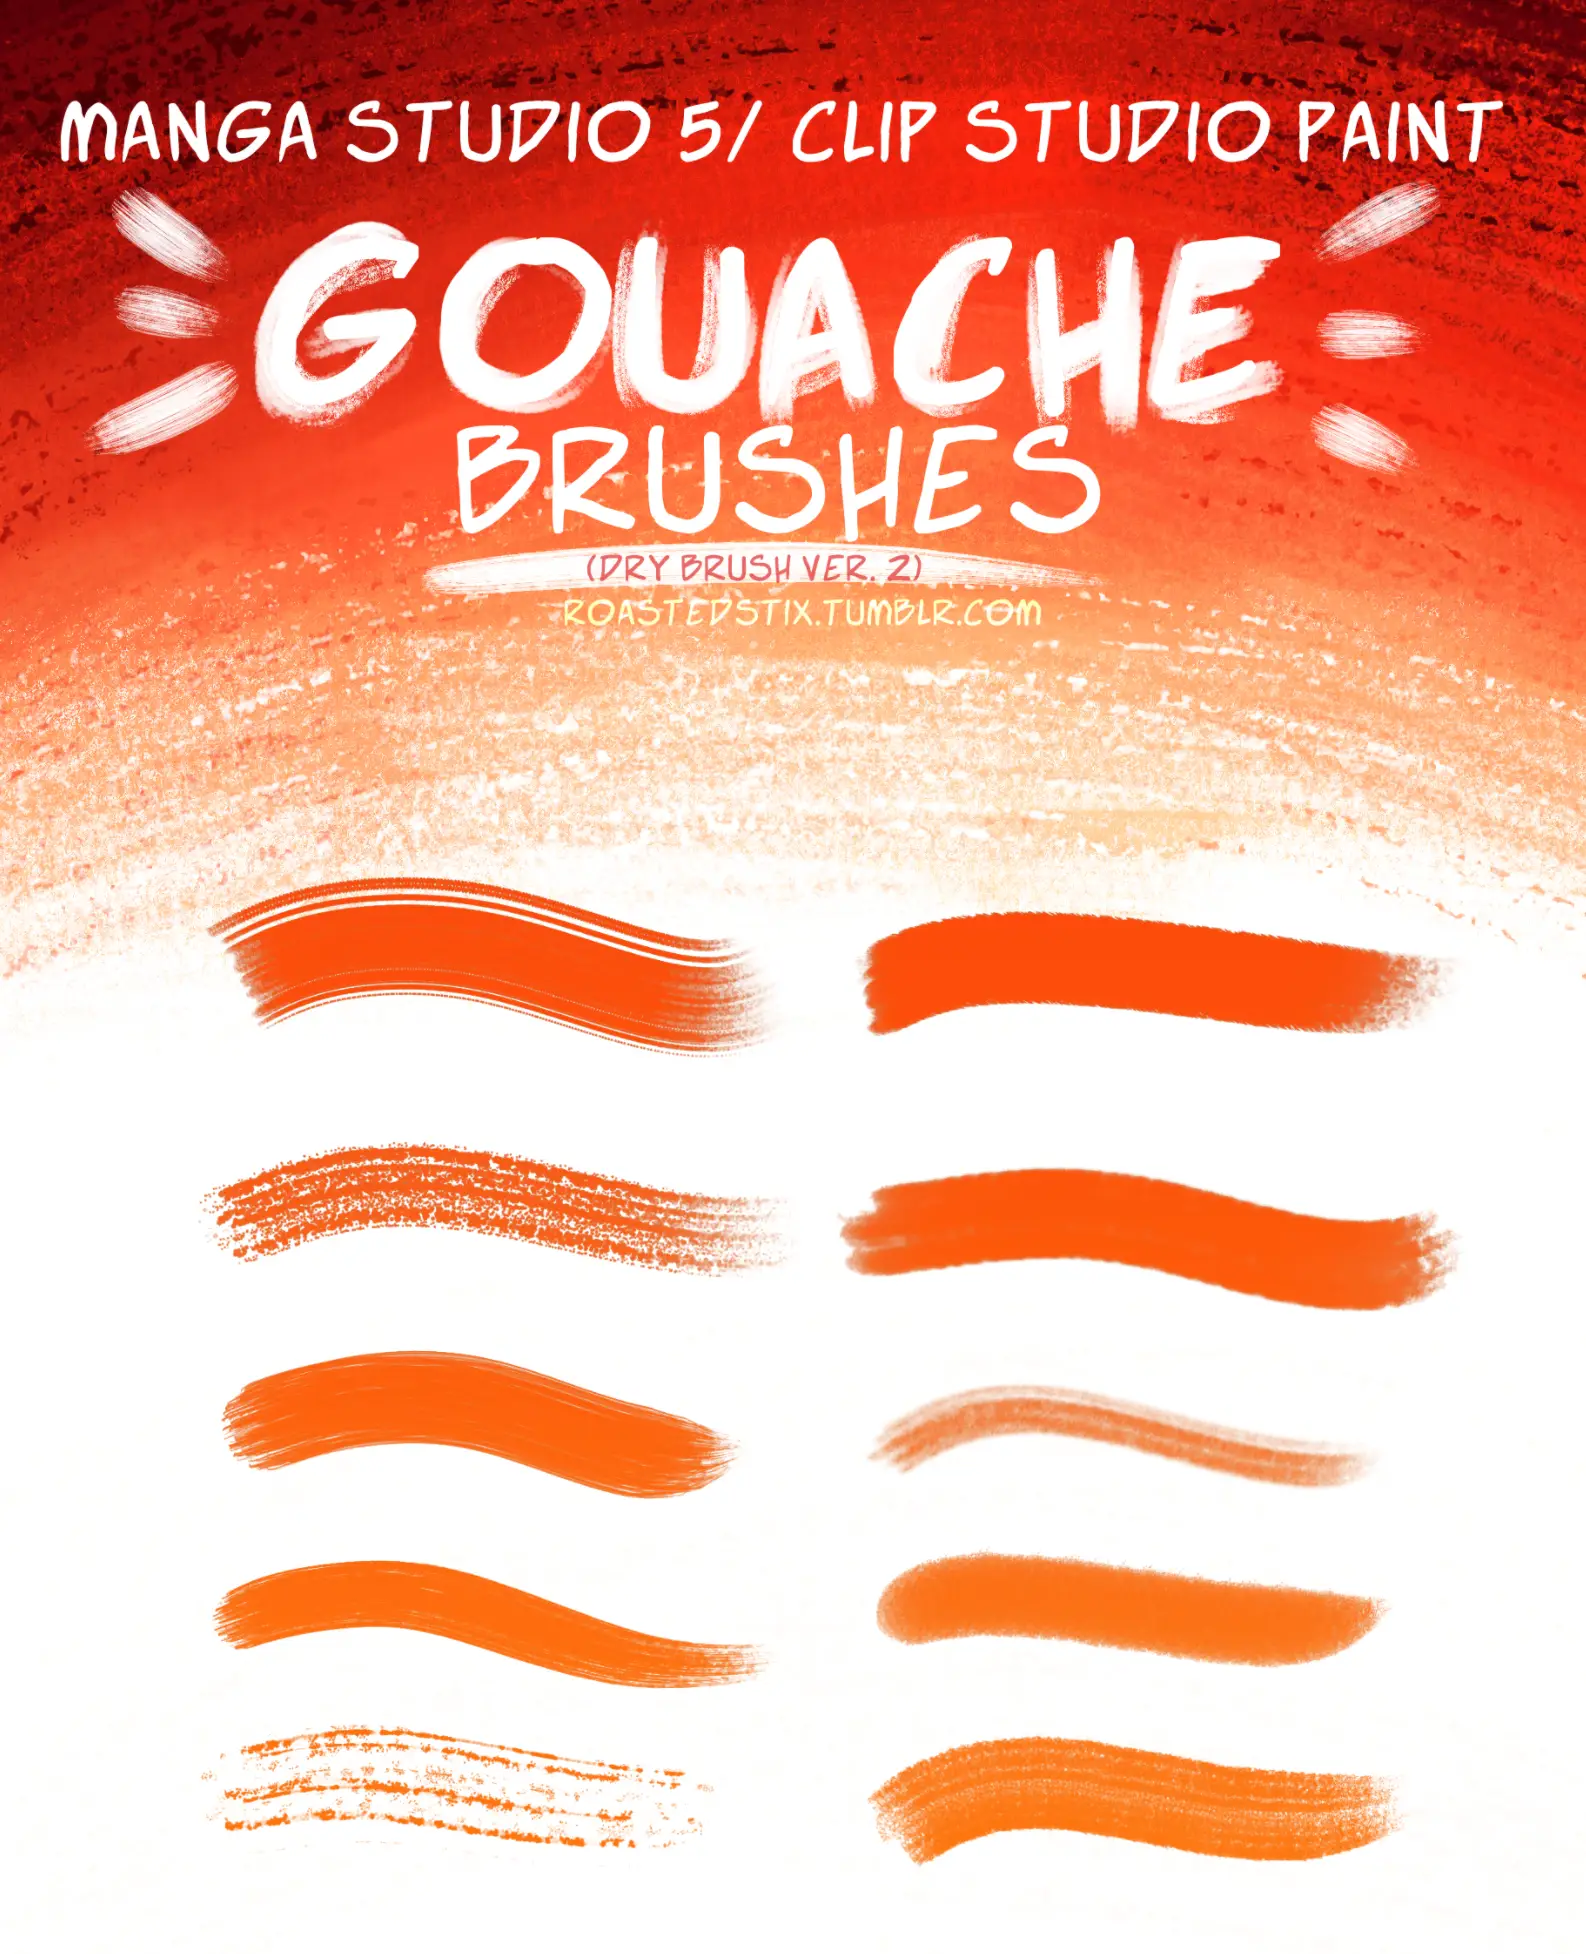 gouache brushes